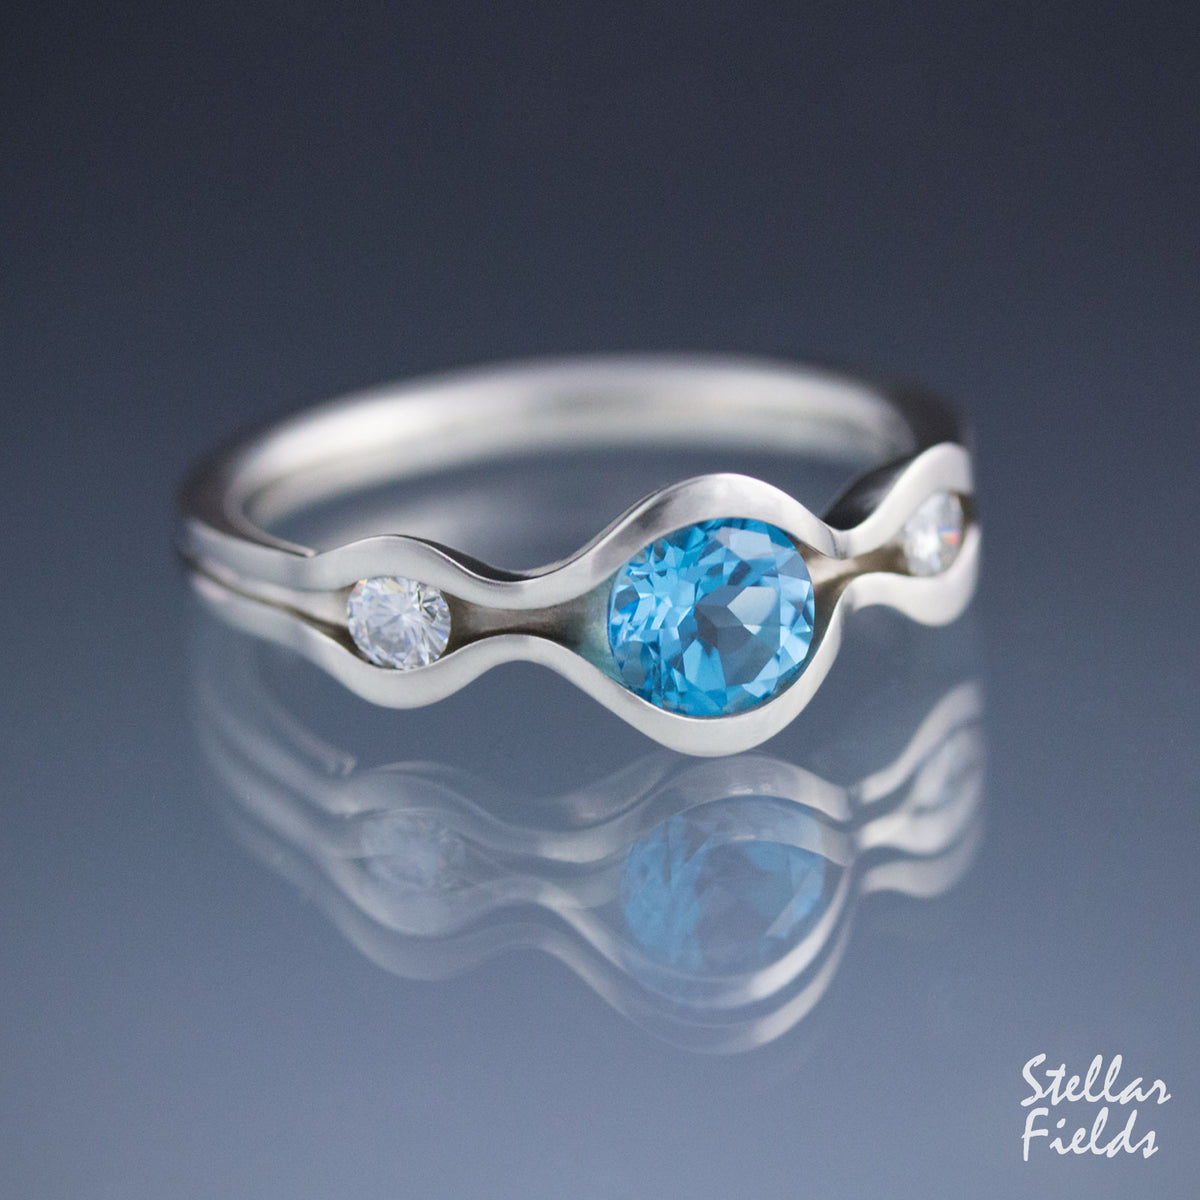 Swiss Blue Topaz Wave Ring Three Stone Ring Canadian Diamonds Platinum Stellar Fields Jewelry